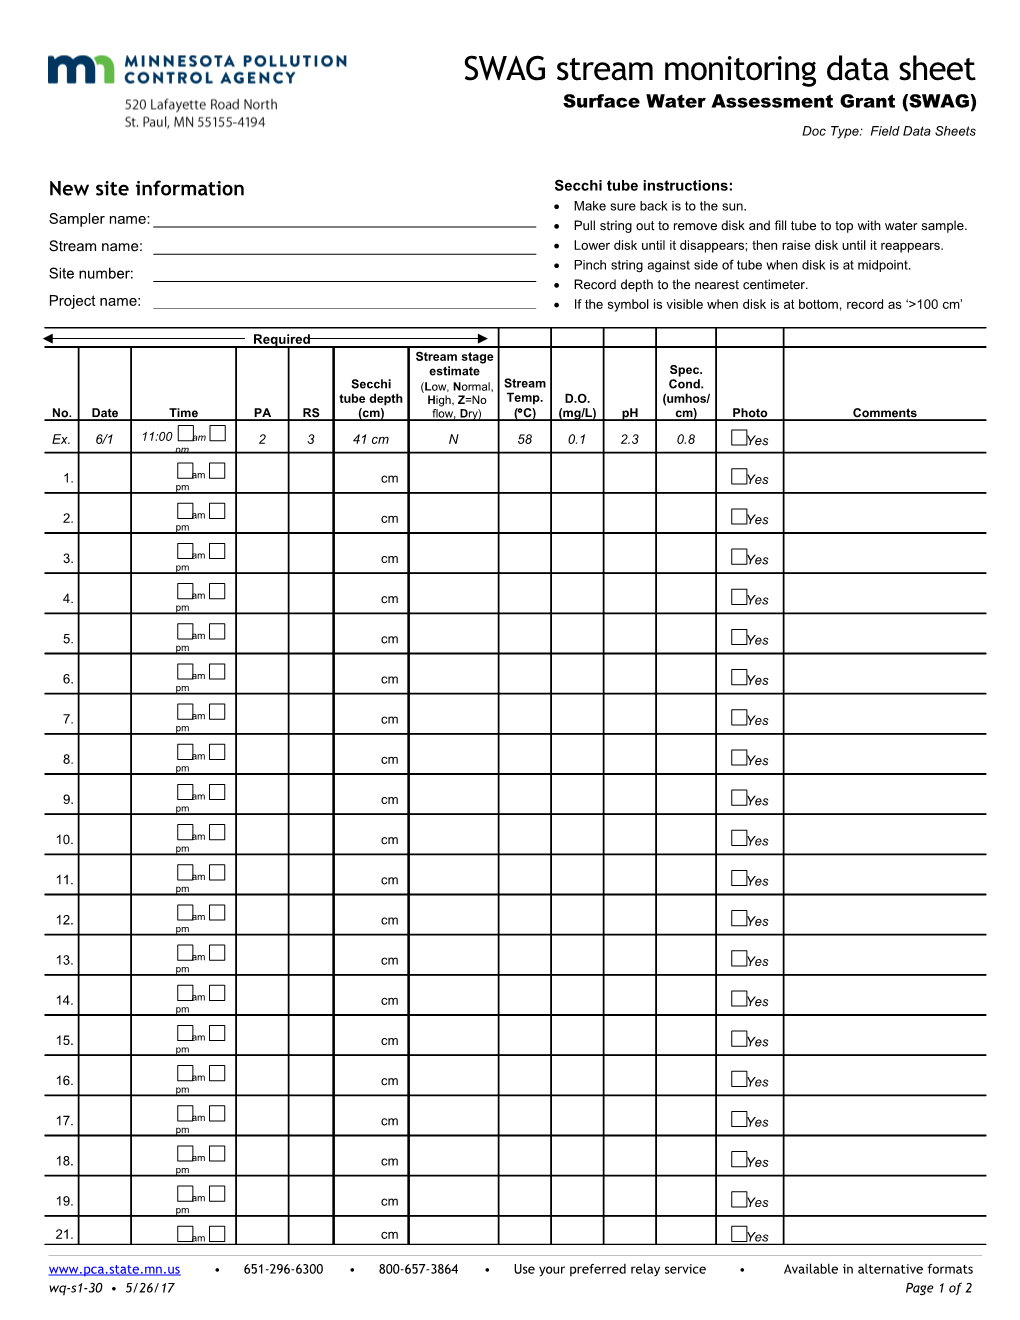 SWAG Stream Monitoring Data Sheet - Form